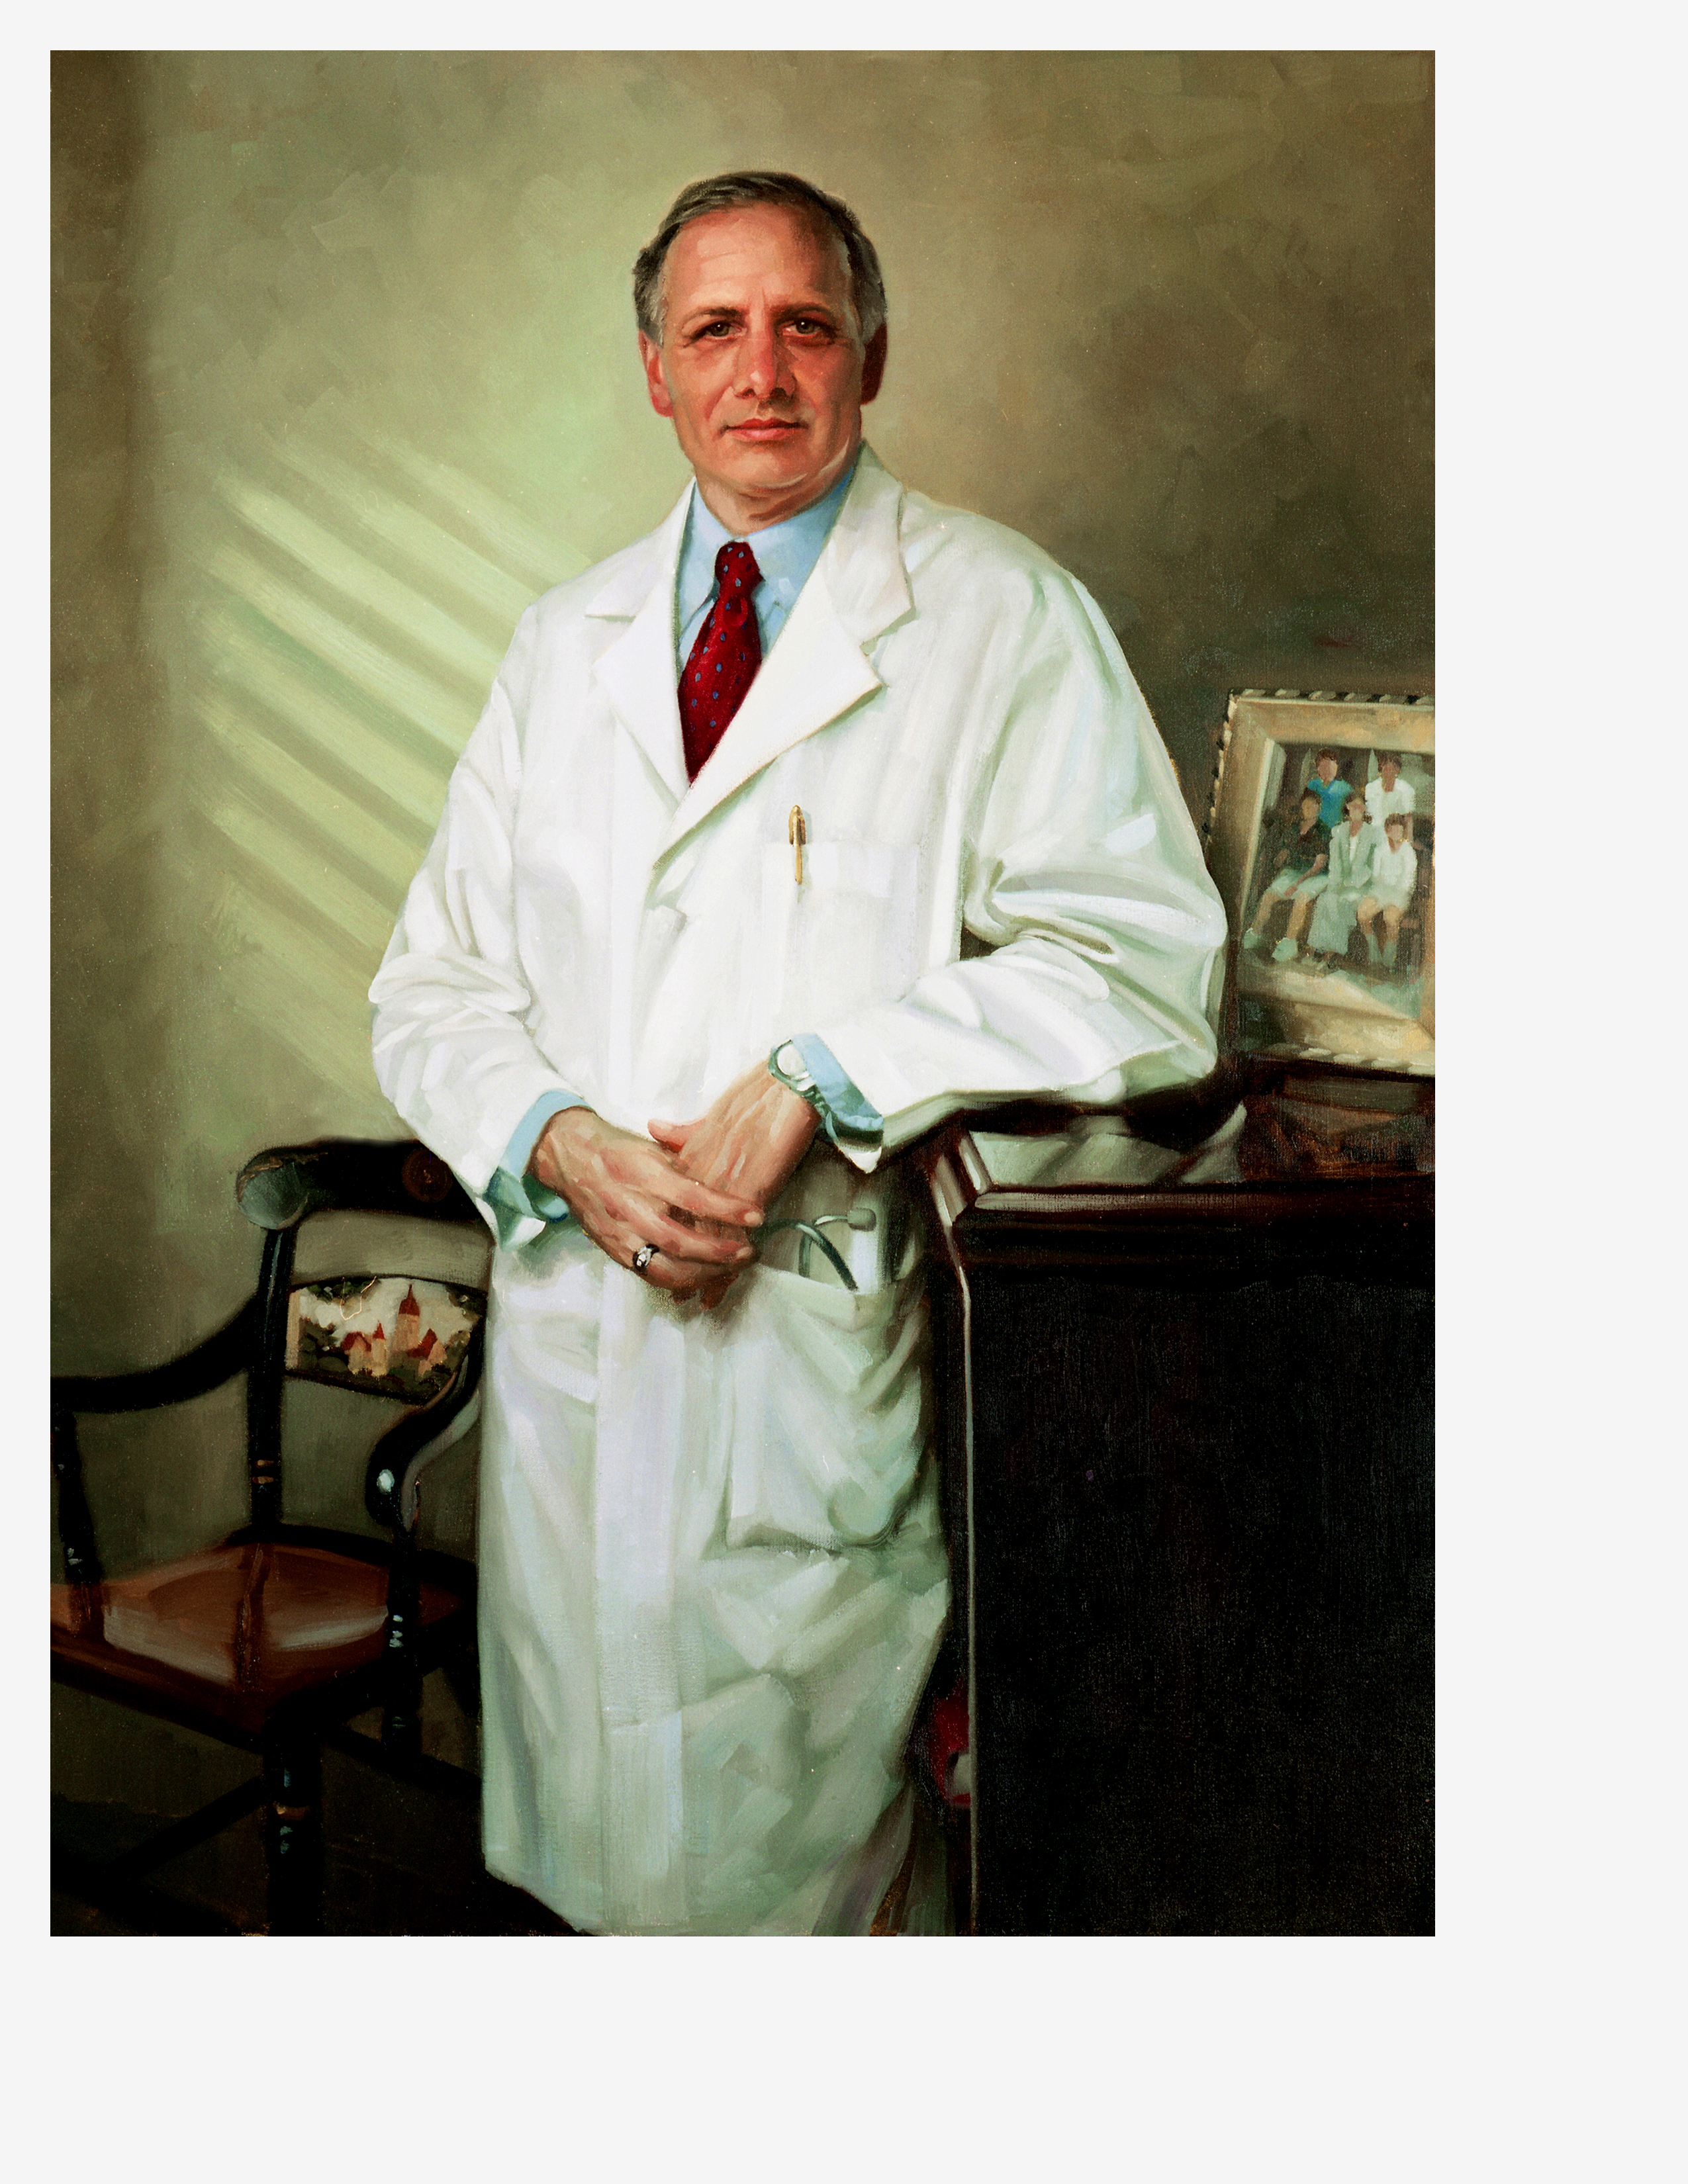 Dr. Tom Nasca